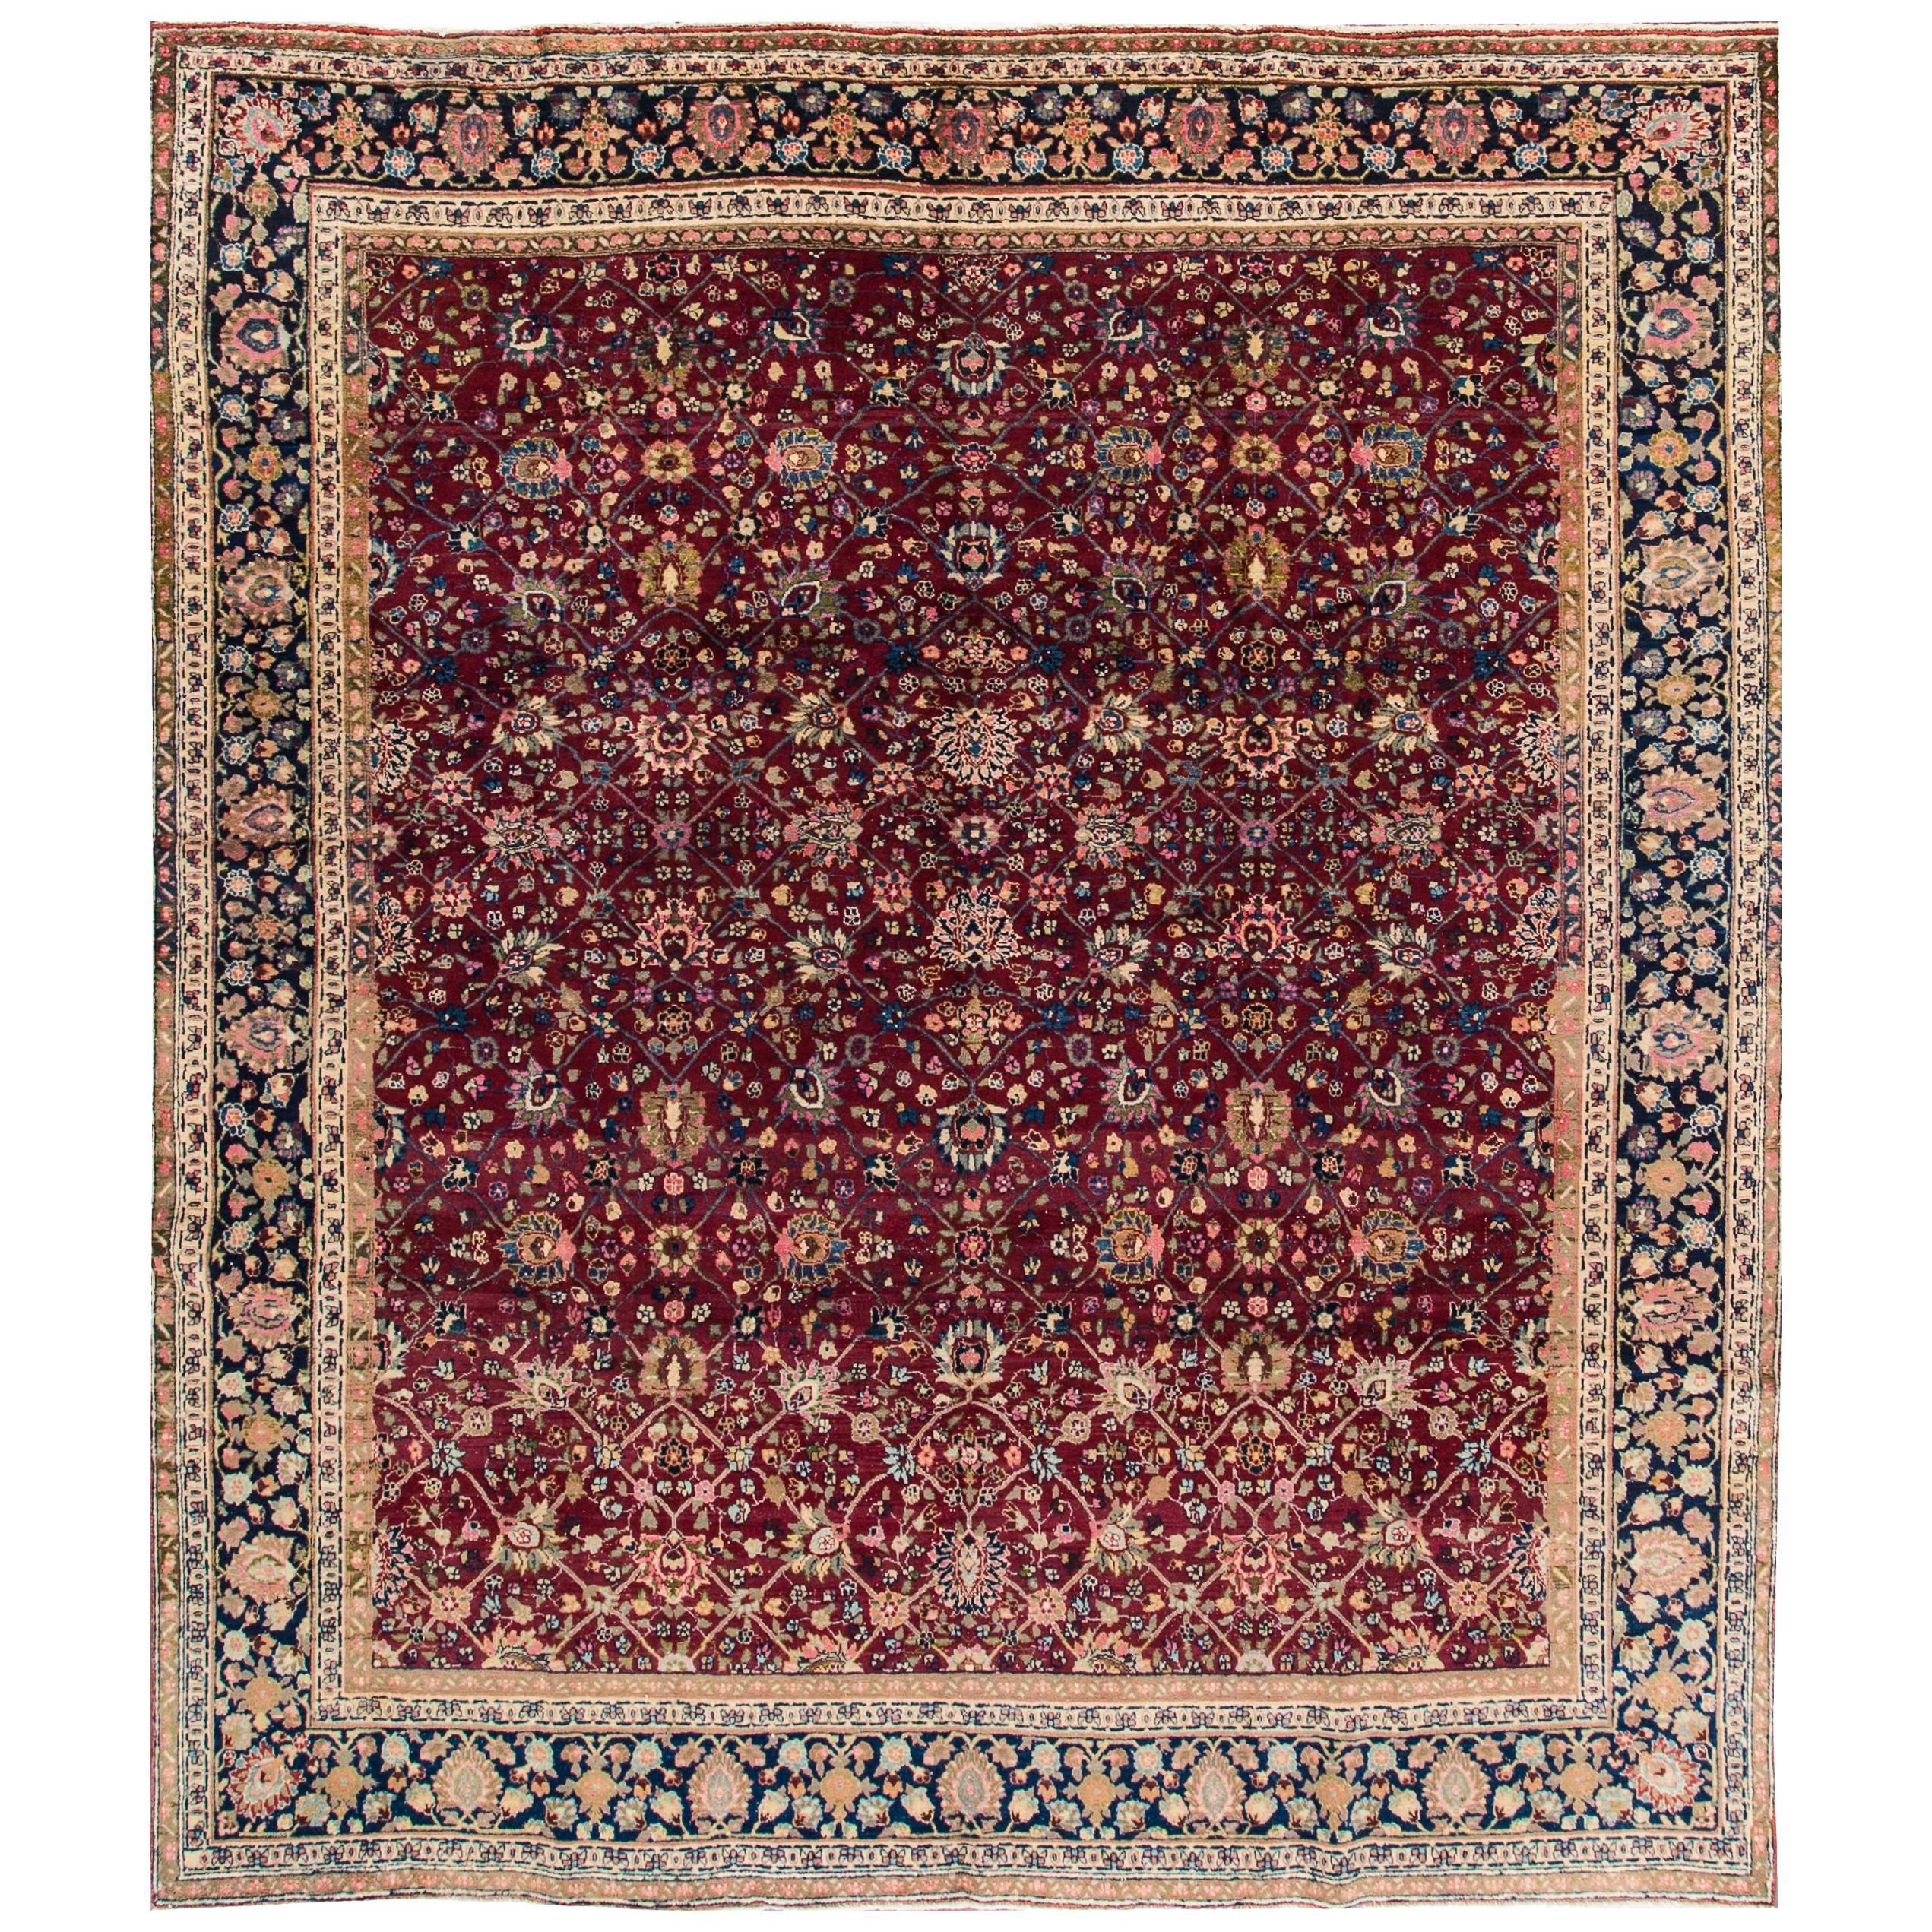 Simply Beautiful Antique Tabriz Rug